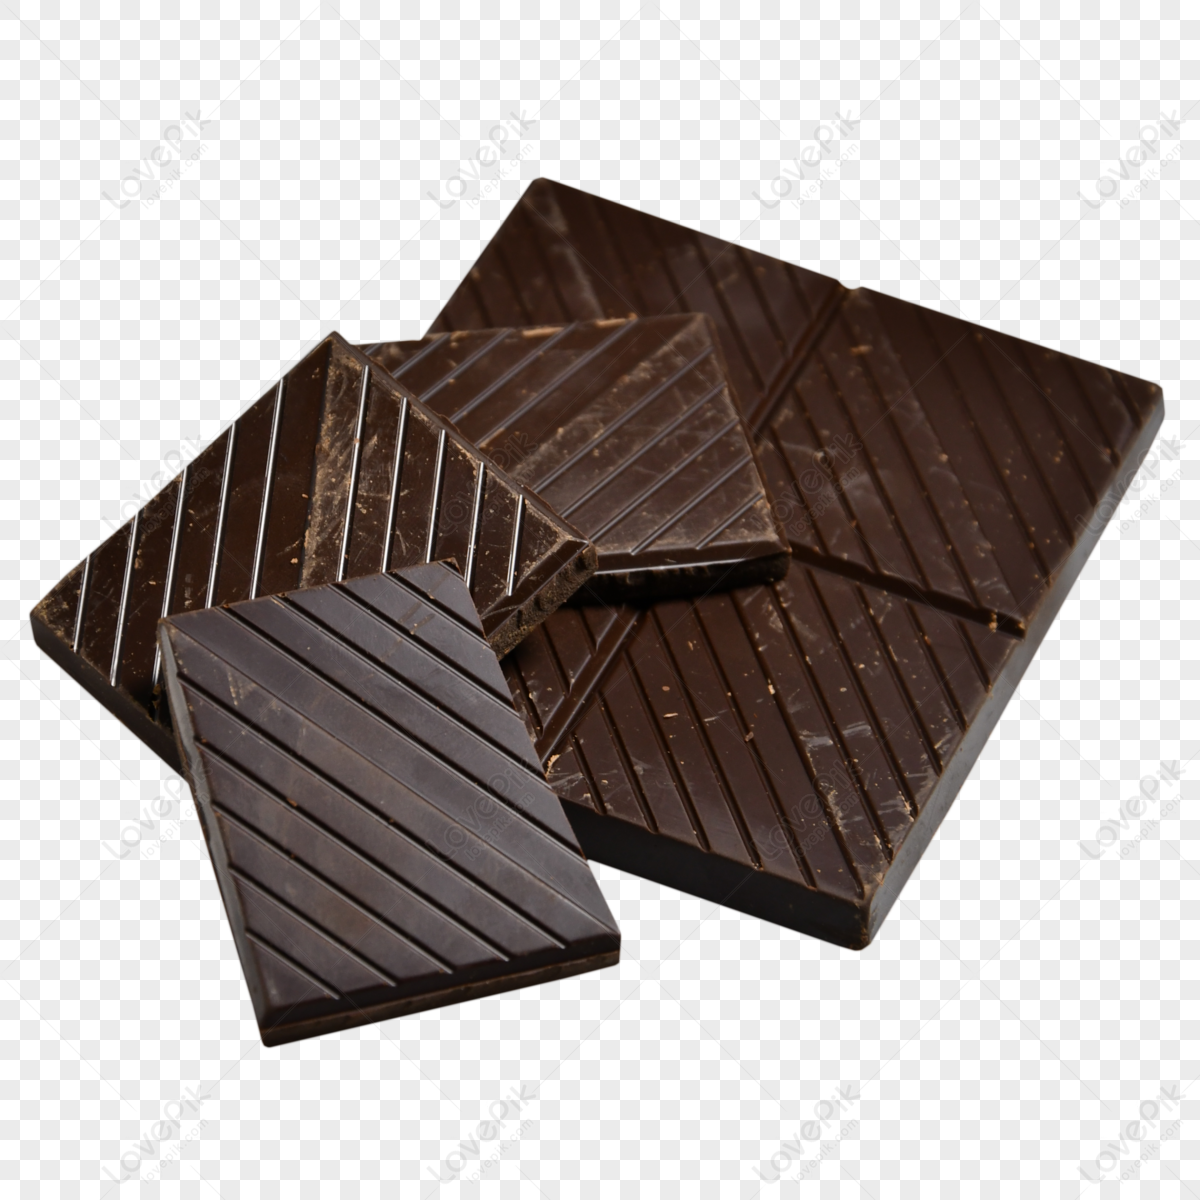 Chocolate Brown Vector Hd Images, Brown Chocolate Brush Pantone, Brown,  Stroke, Brush PNG Image For Free Download